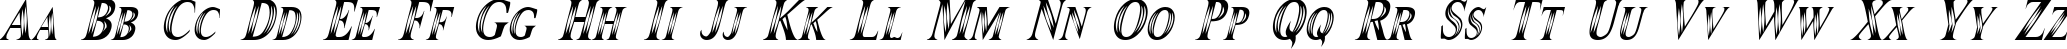 Пример написания английского алфавита шрифтом Maranallo High Italic